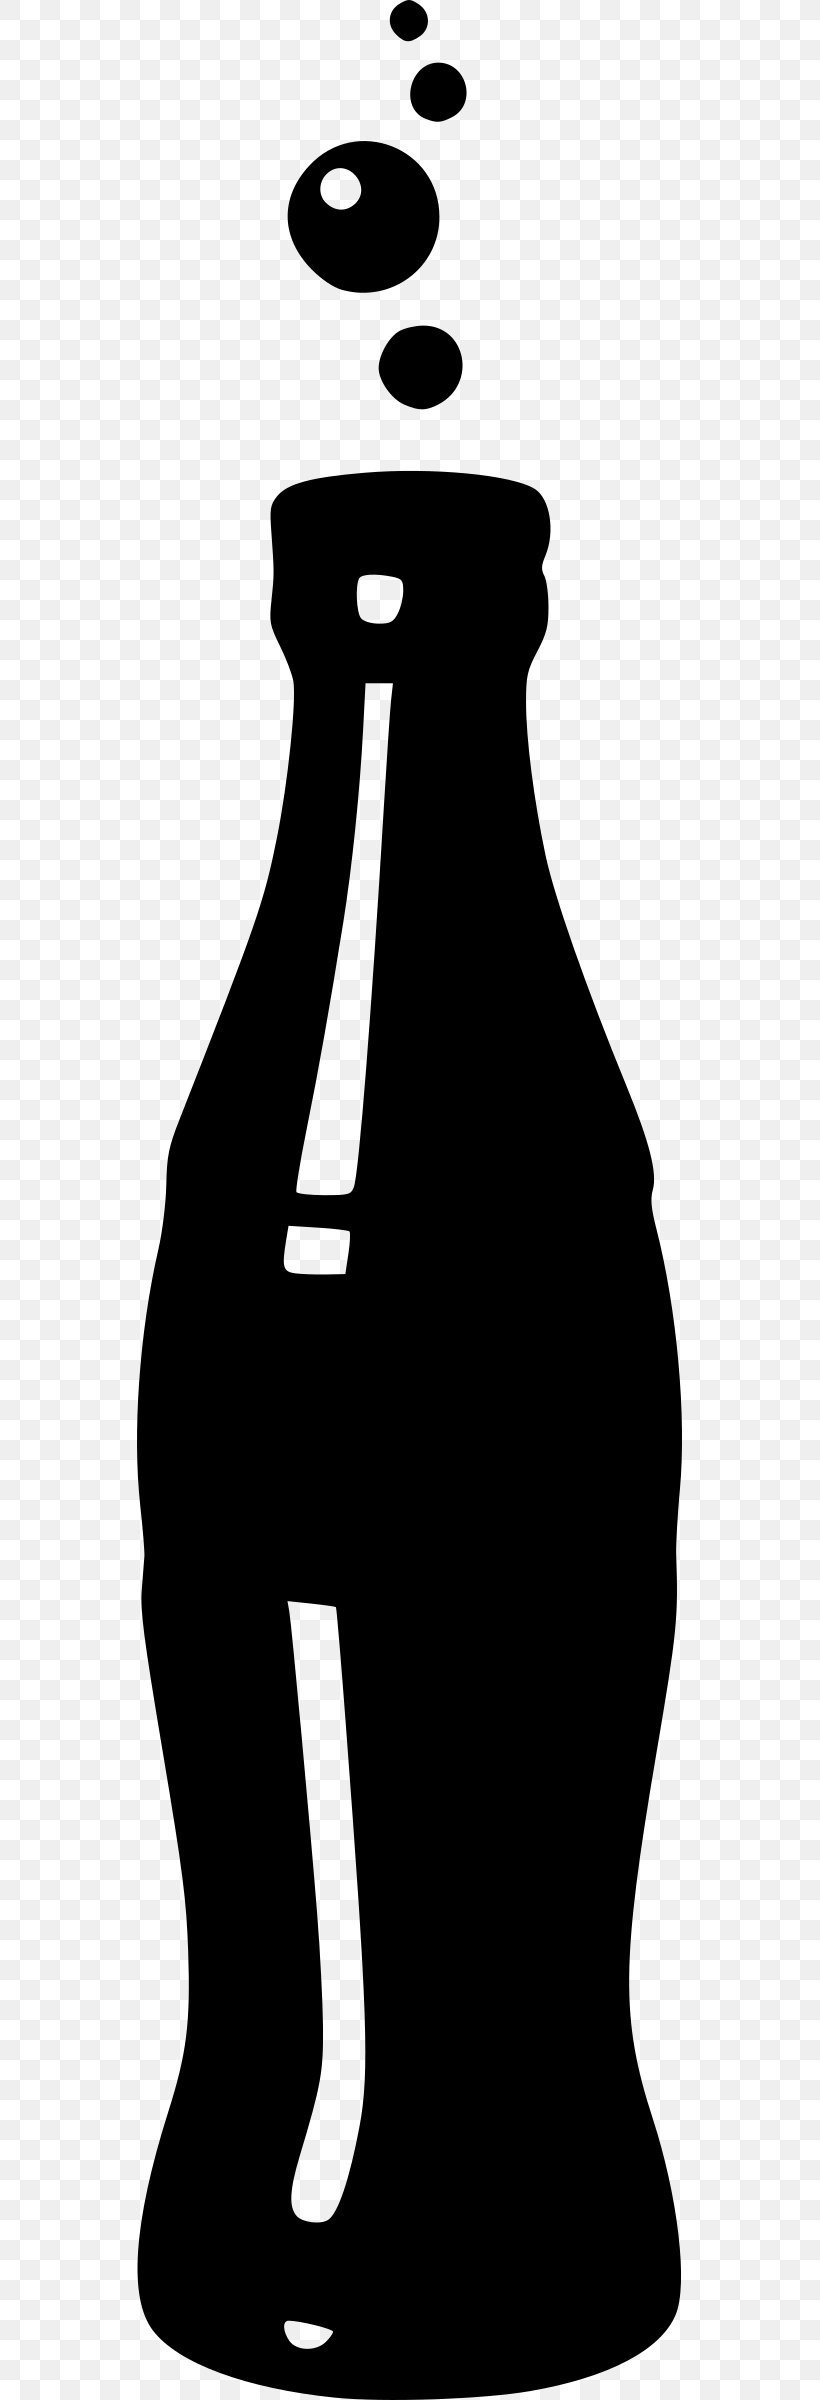 Fizzy Drinks Beverage Can Bottle Clip Art, PNG, 545x2400px, Fizzy Drinks, Beer Bottle, Beverage Can, Black And White, Bottle Download Free